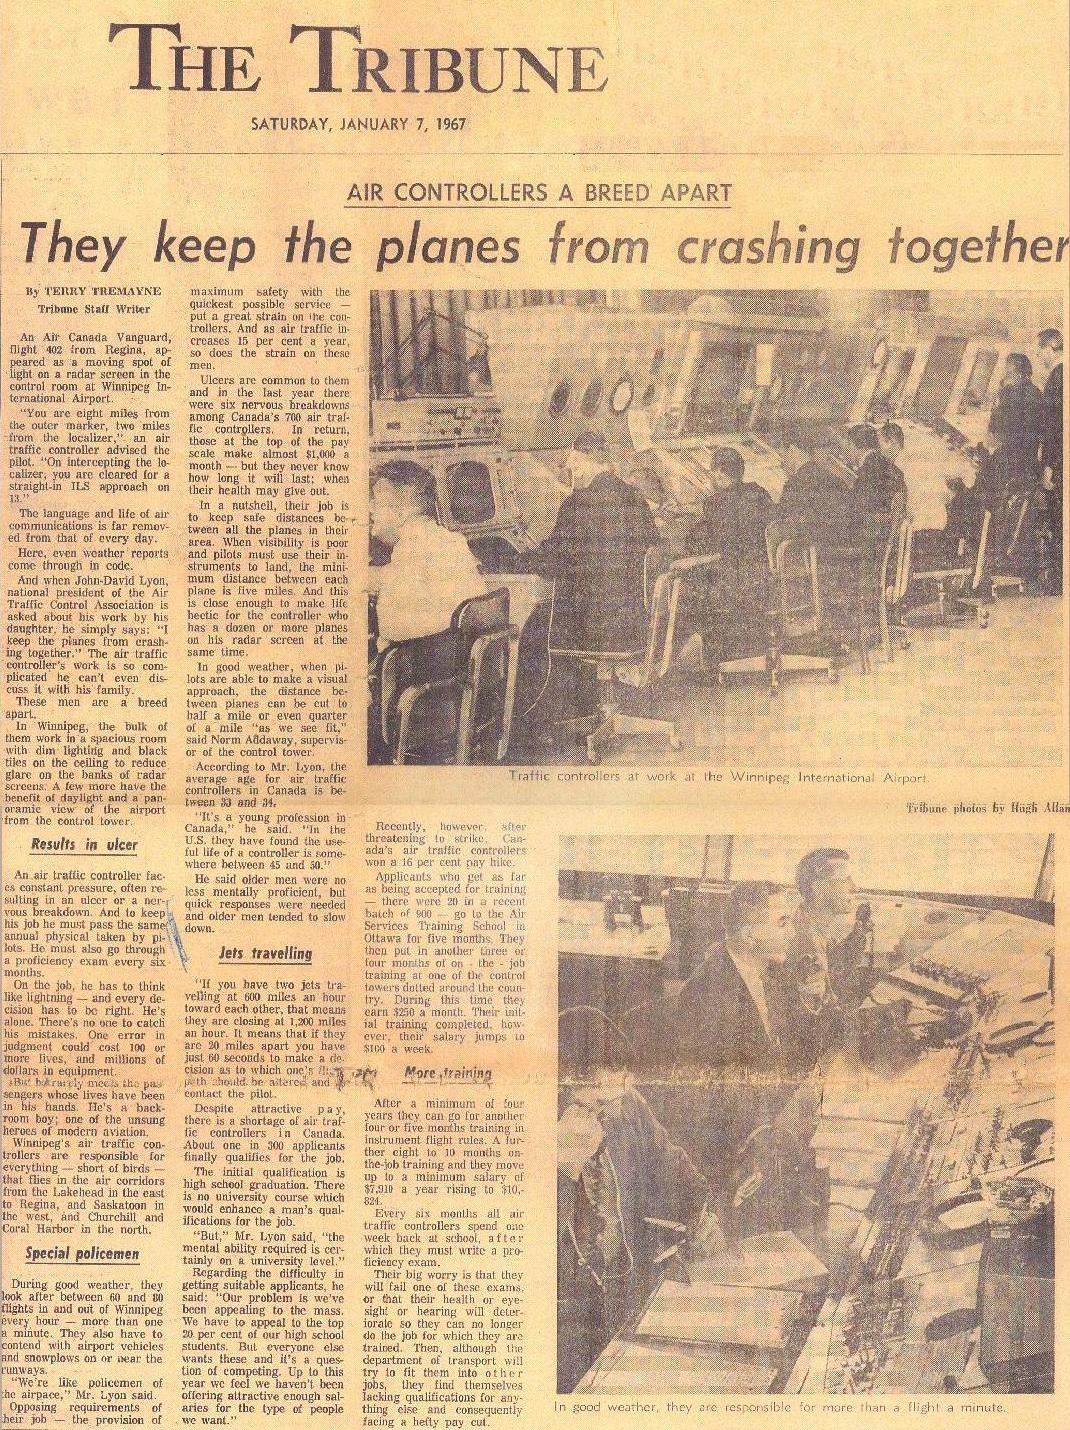 1967 - Winnipeg Tribune article (left mouse click for large image)